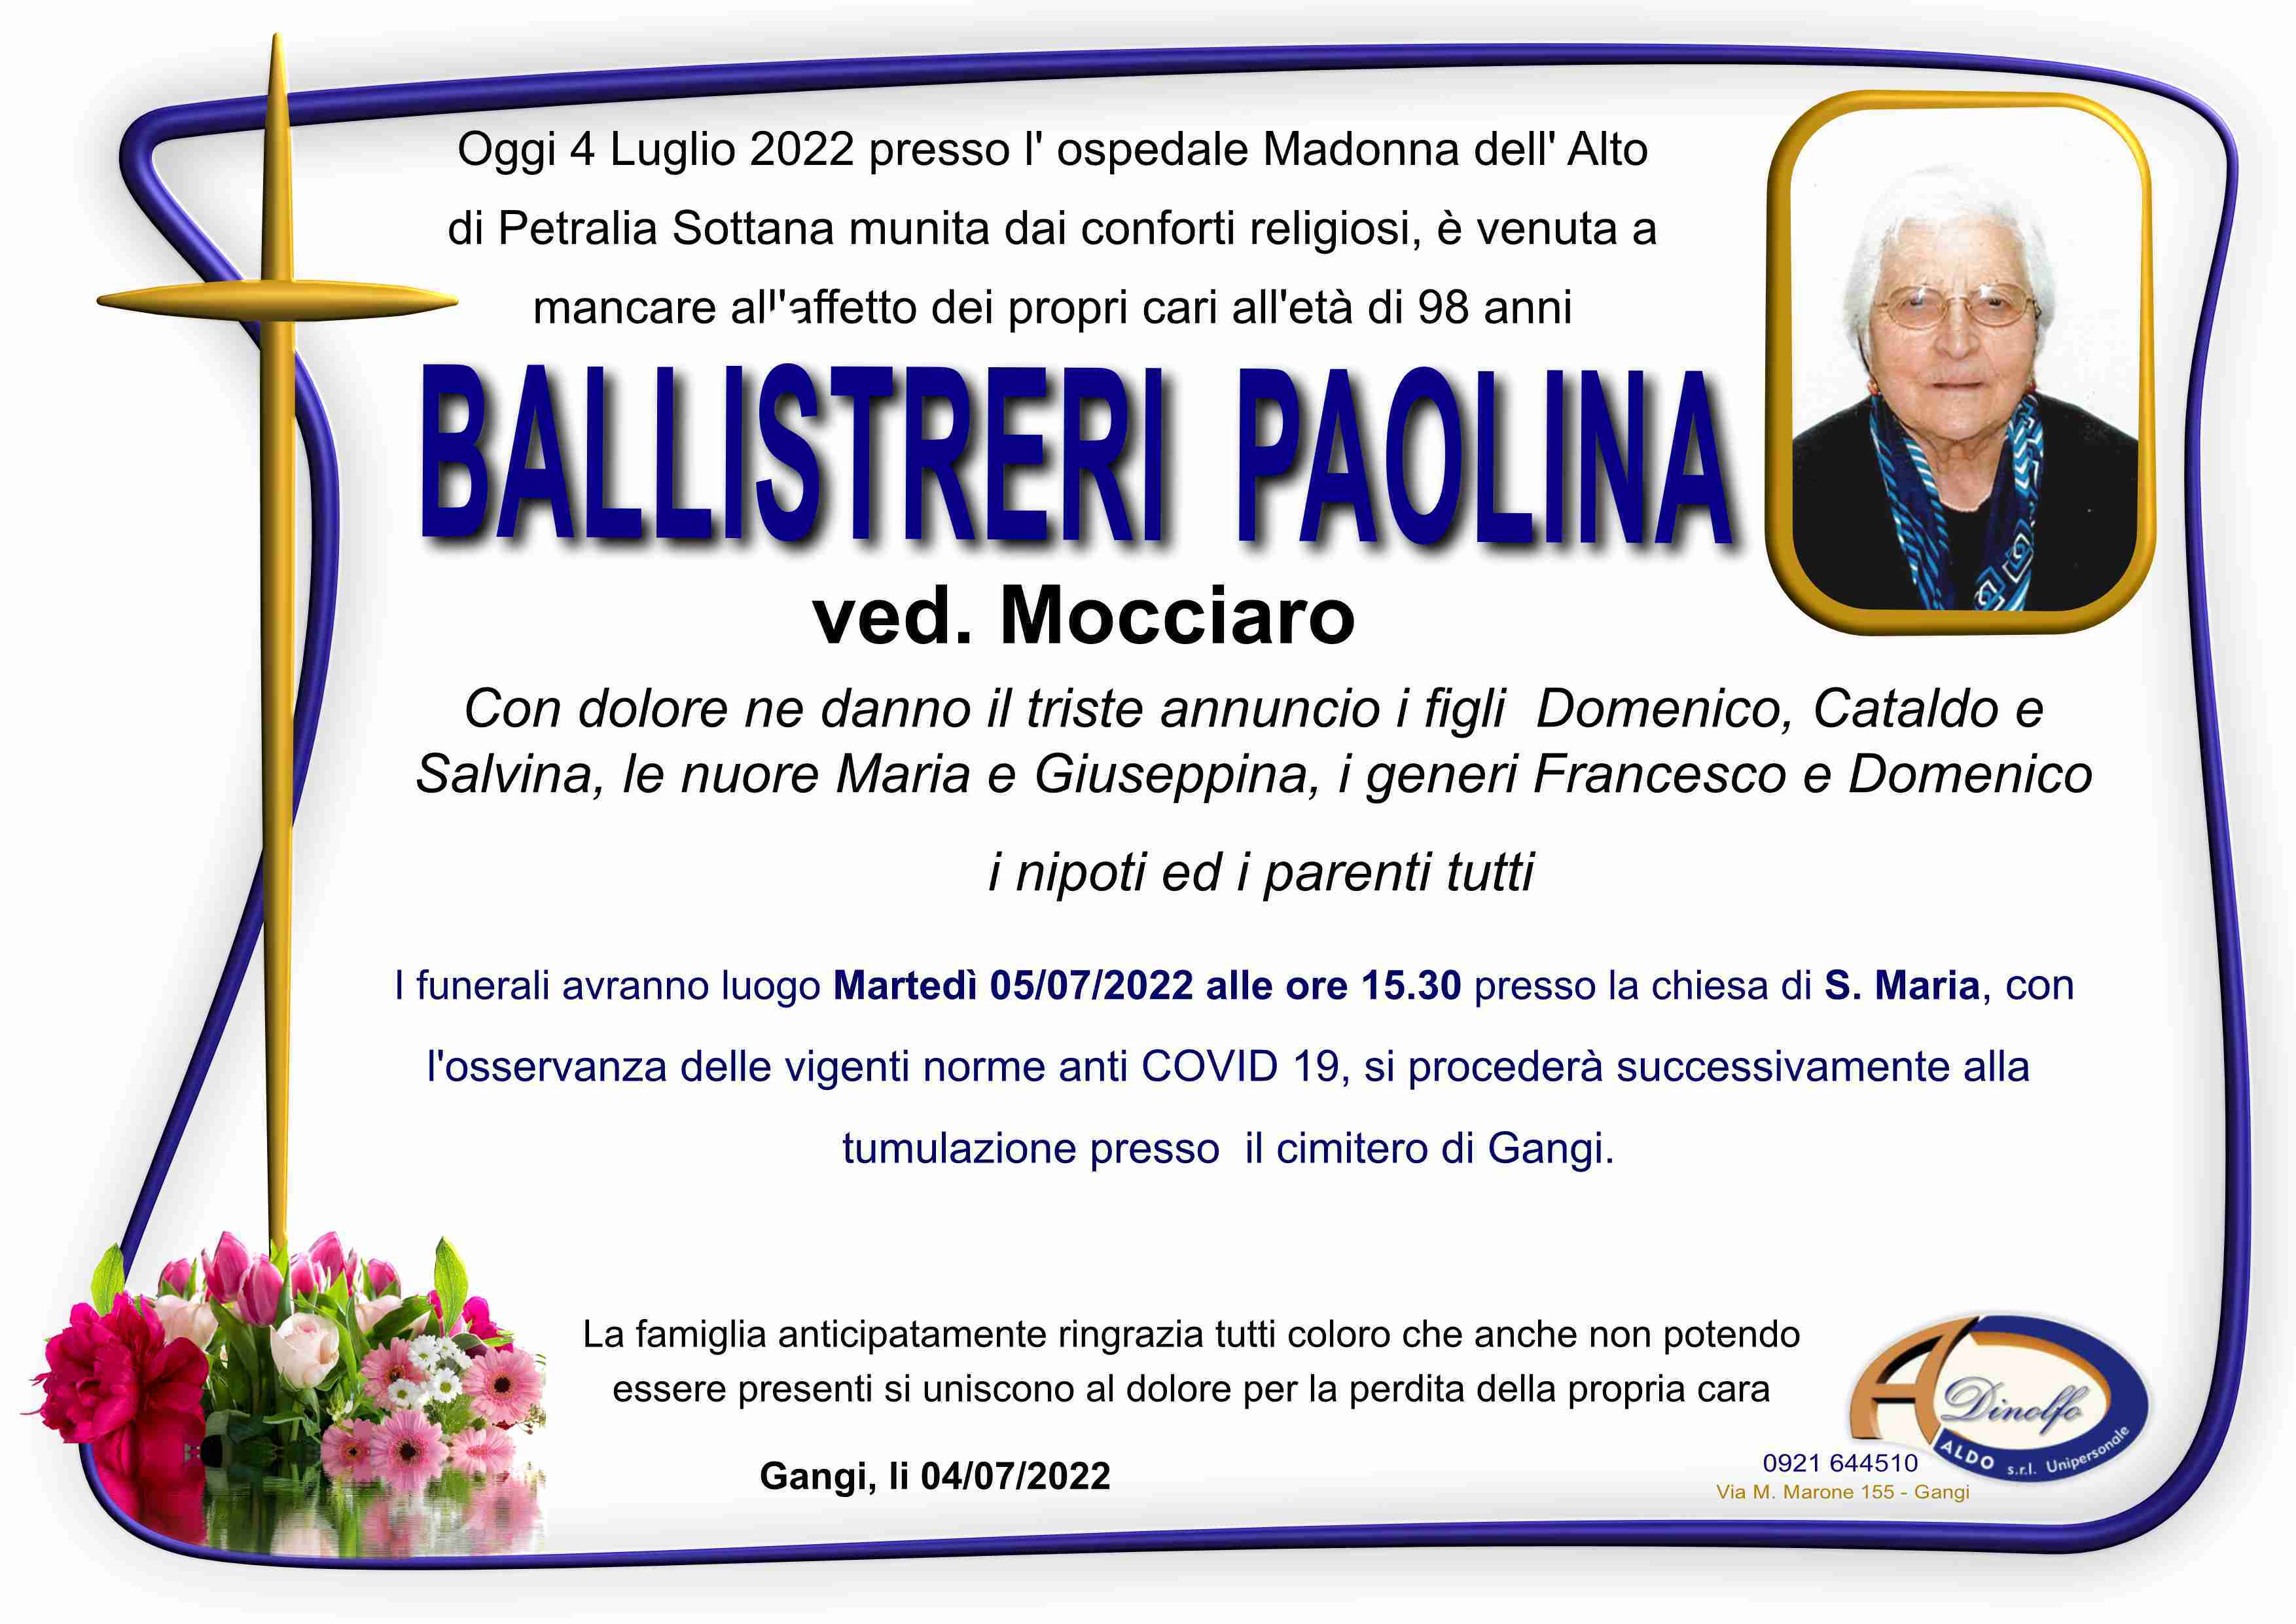 Paolina Ballistreri